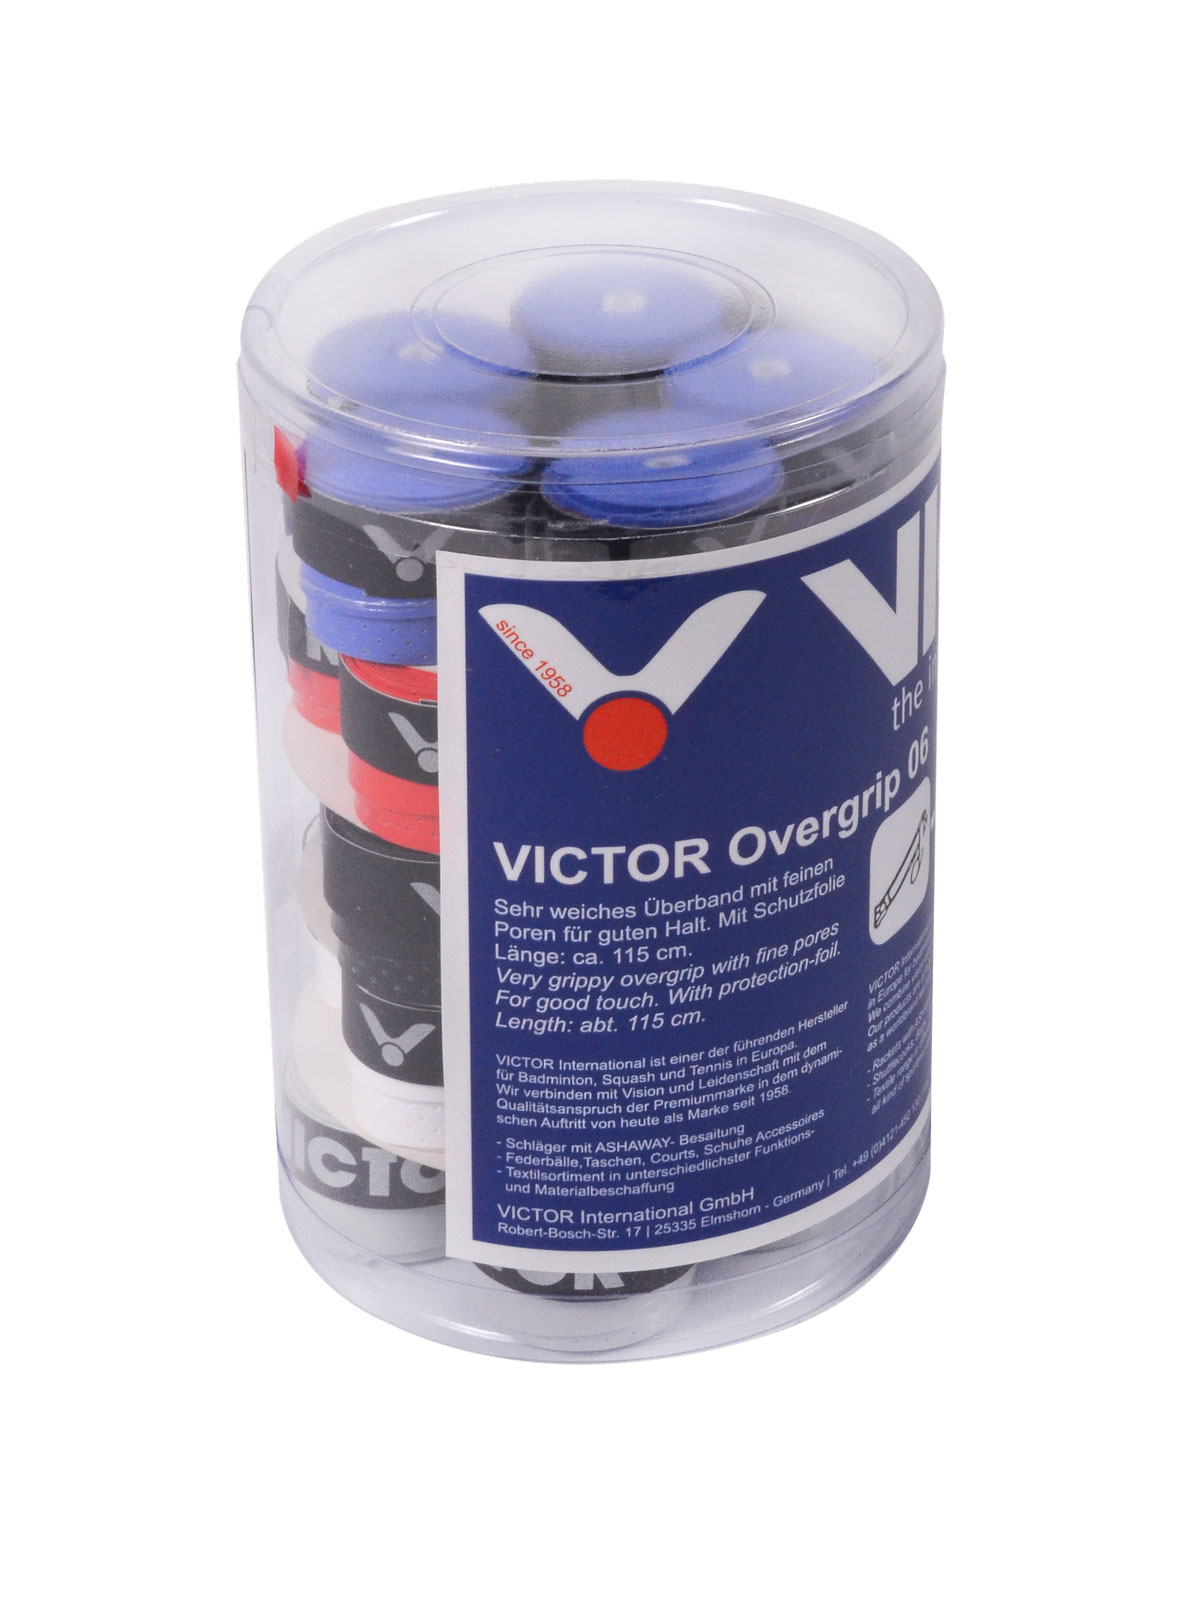 VICTOR Overgrip 06